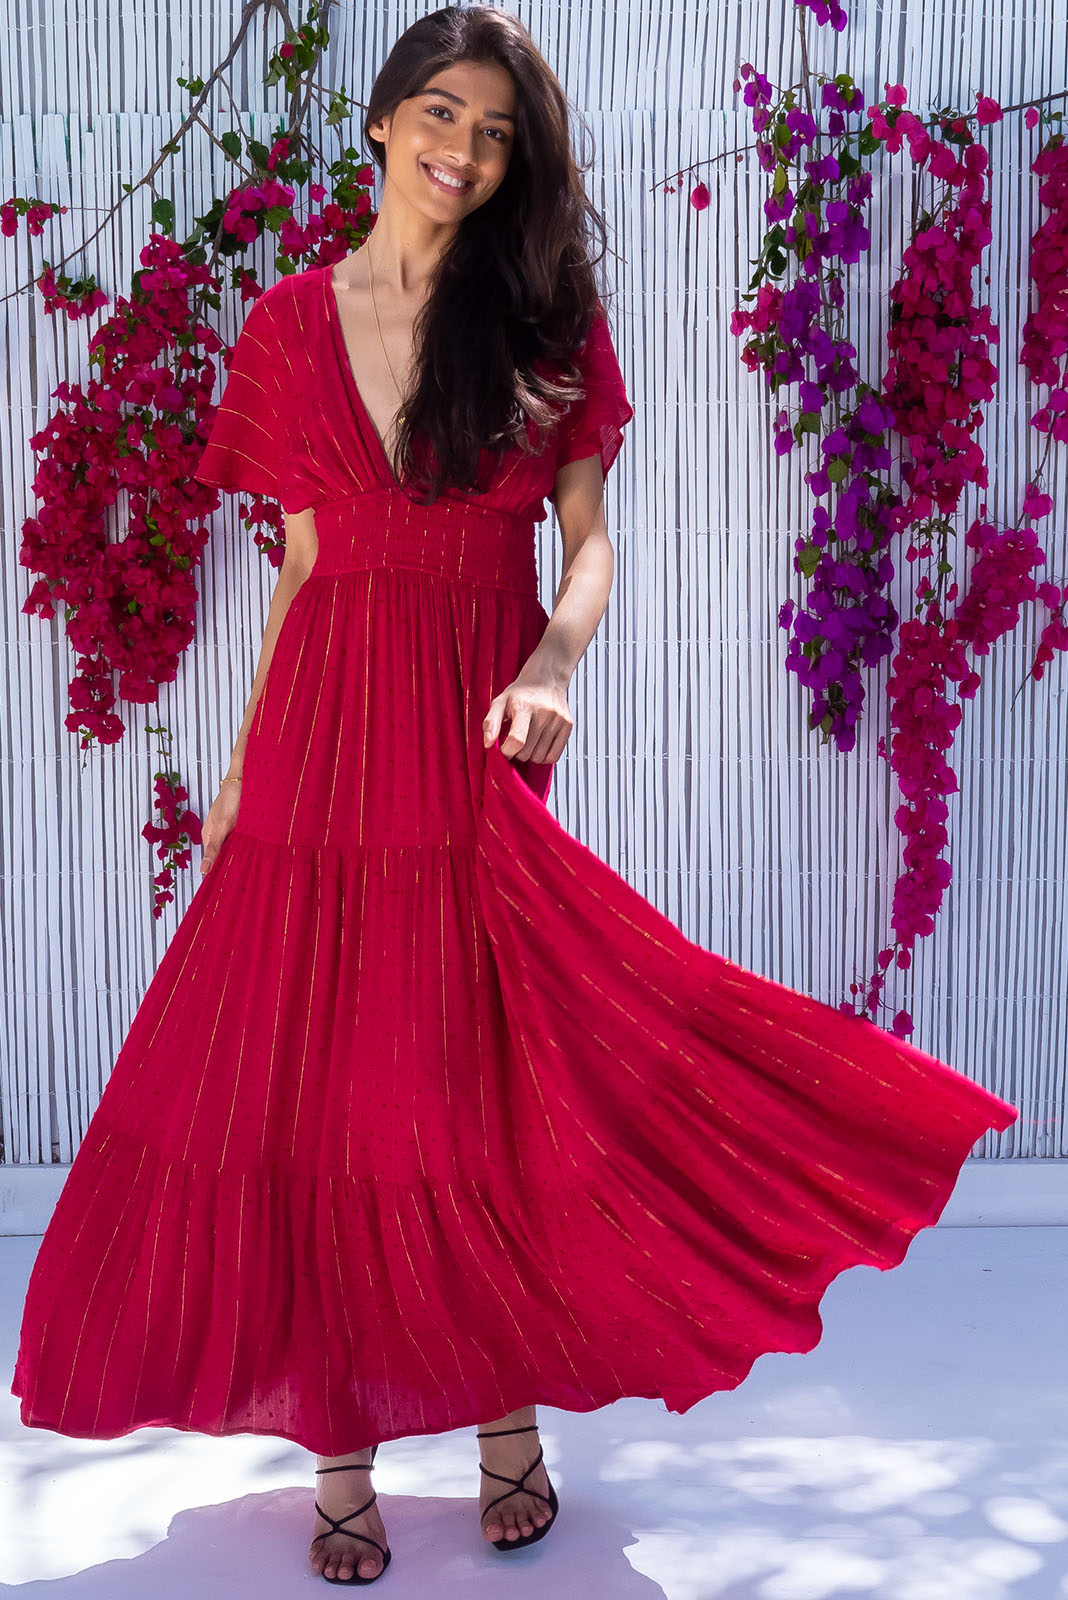 Forurenet Rykke svimmel Romance Dark Red Maxi Dress | Mombasa Rose Boutique | Beach Boho Chic